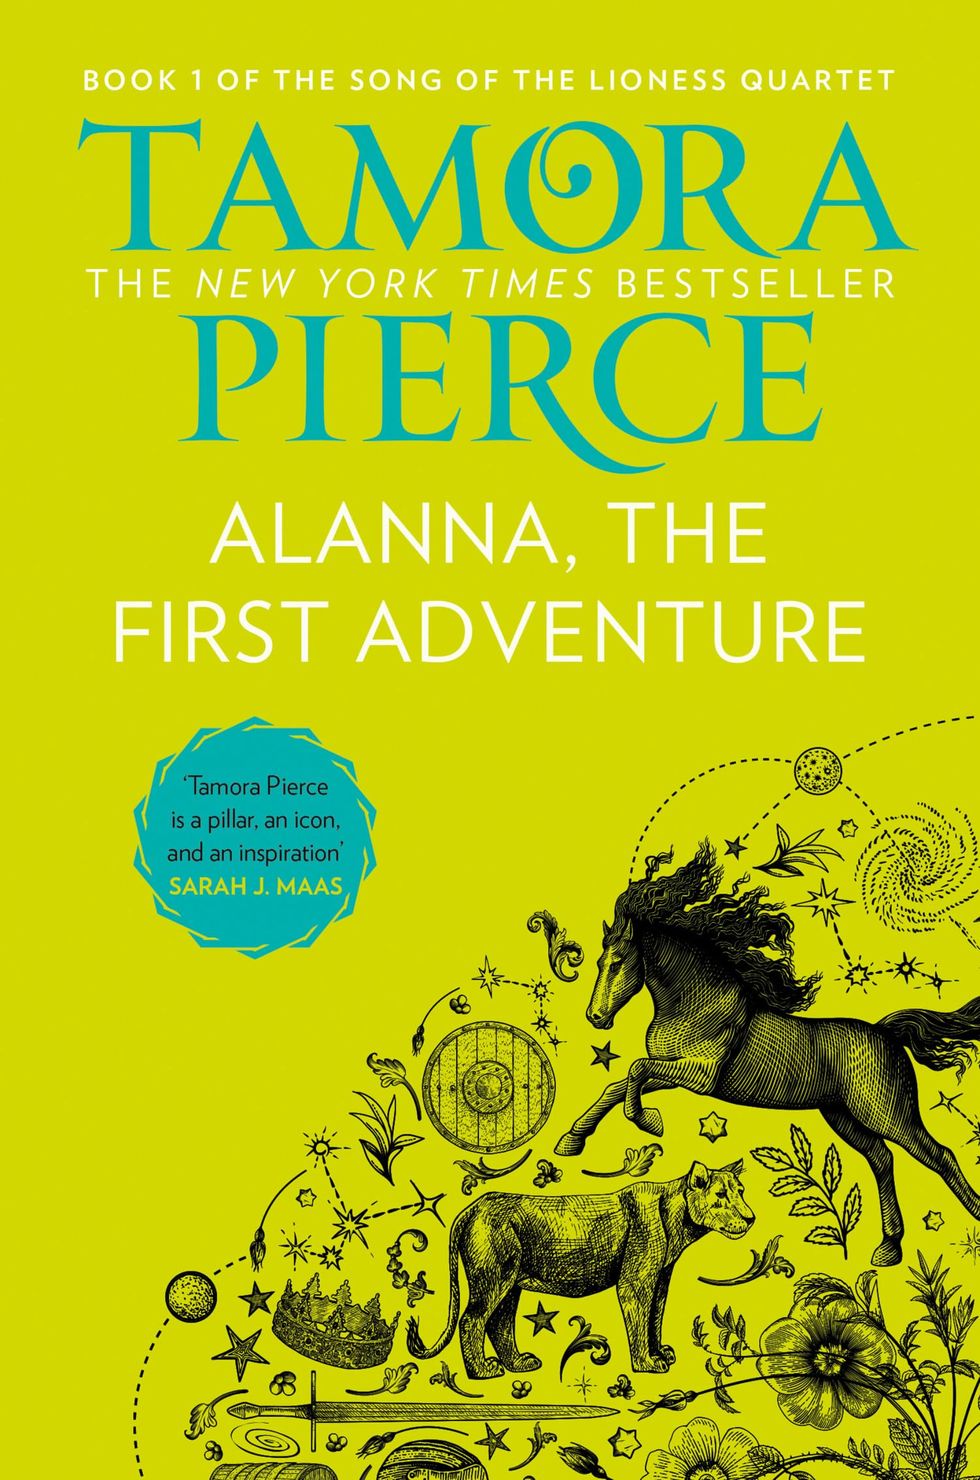 Alanna, The First Adventure by Tamora Pierce